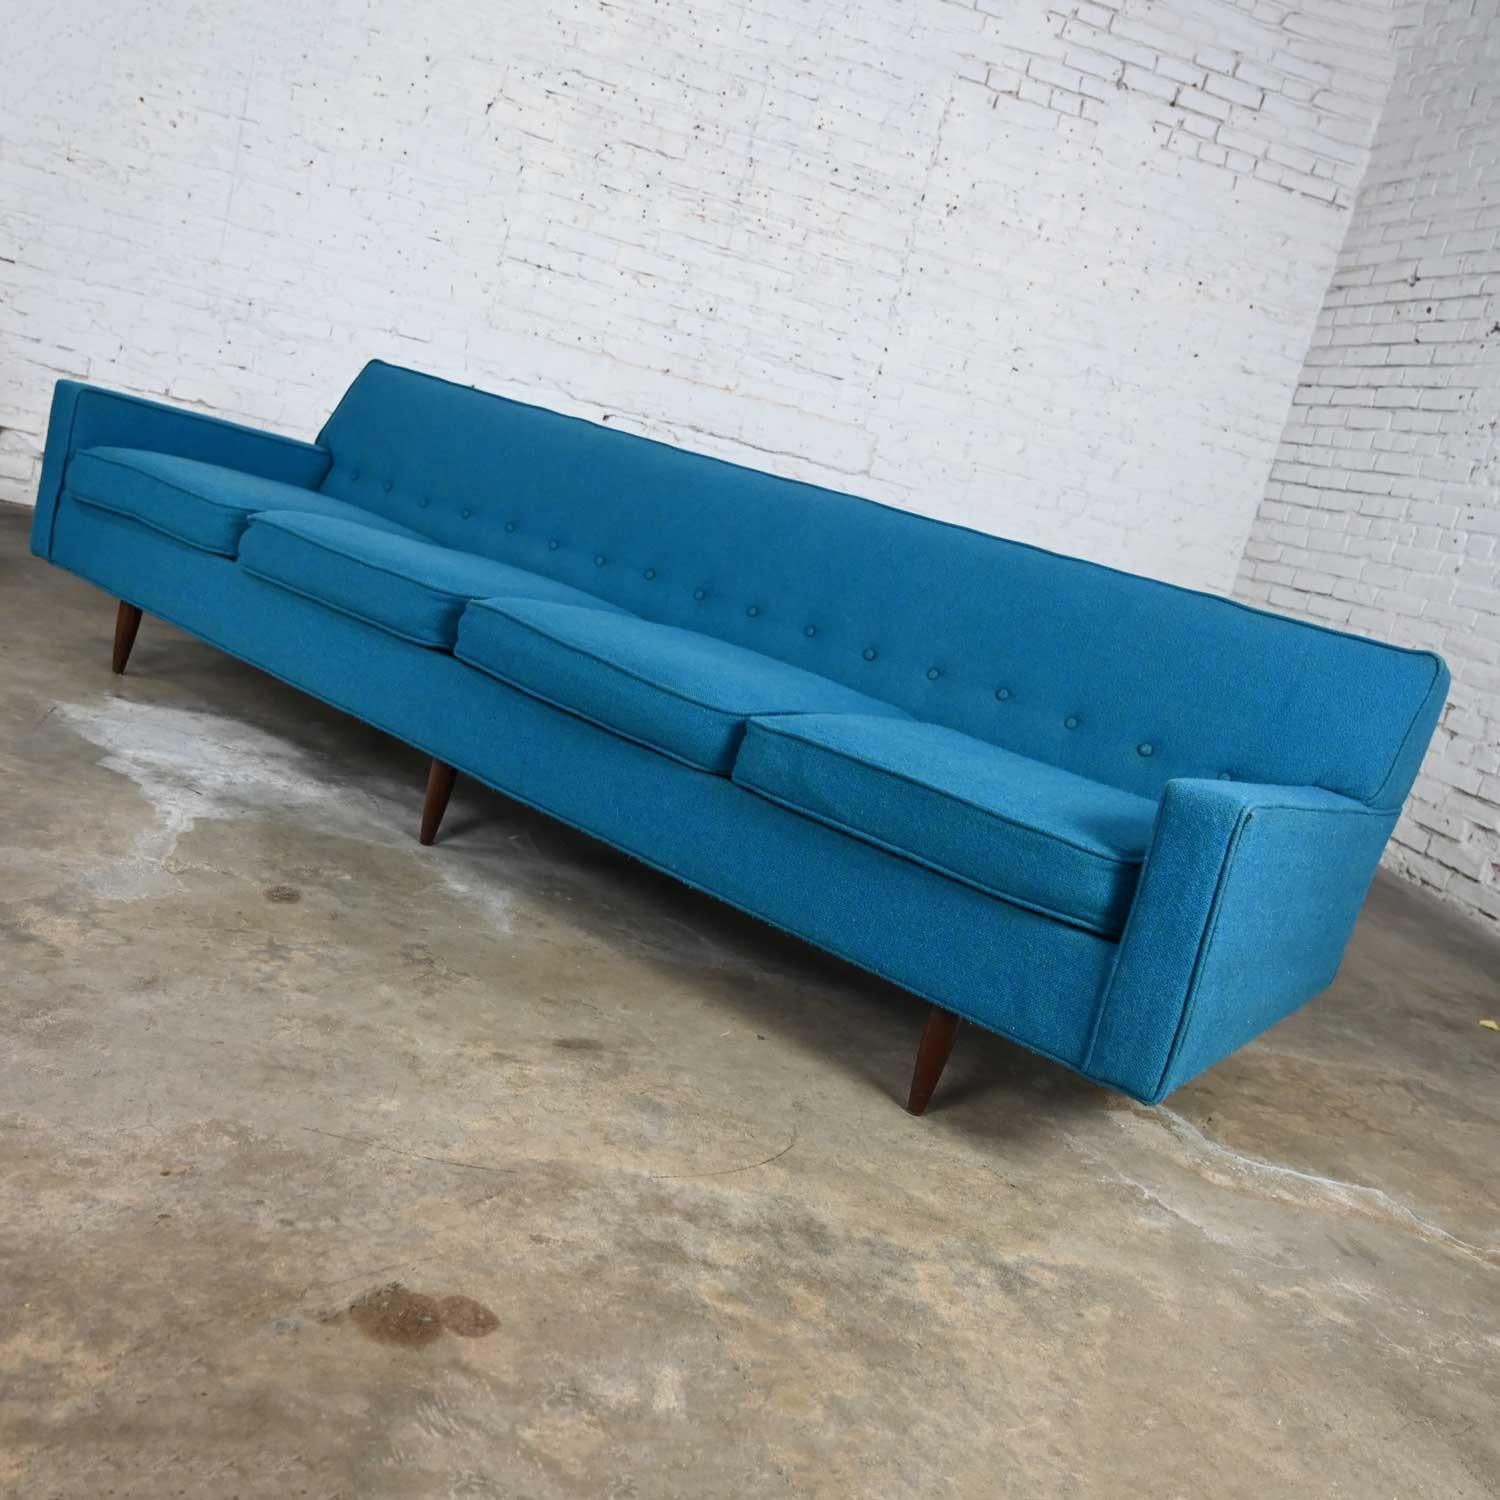 4 cushion sofas